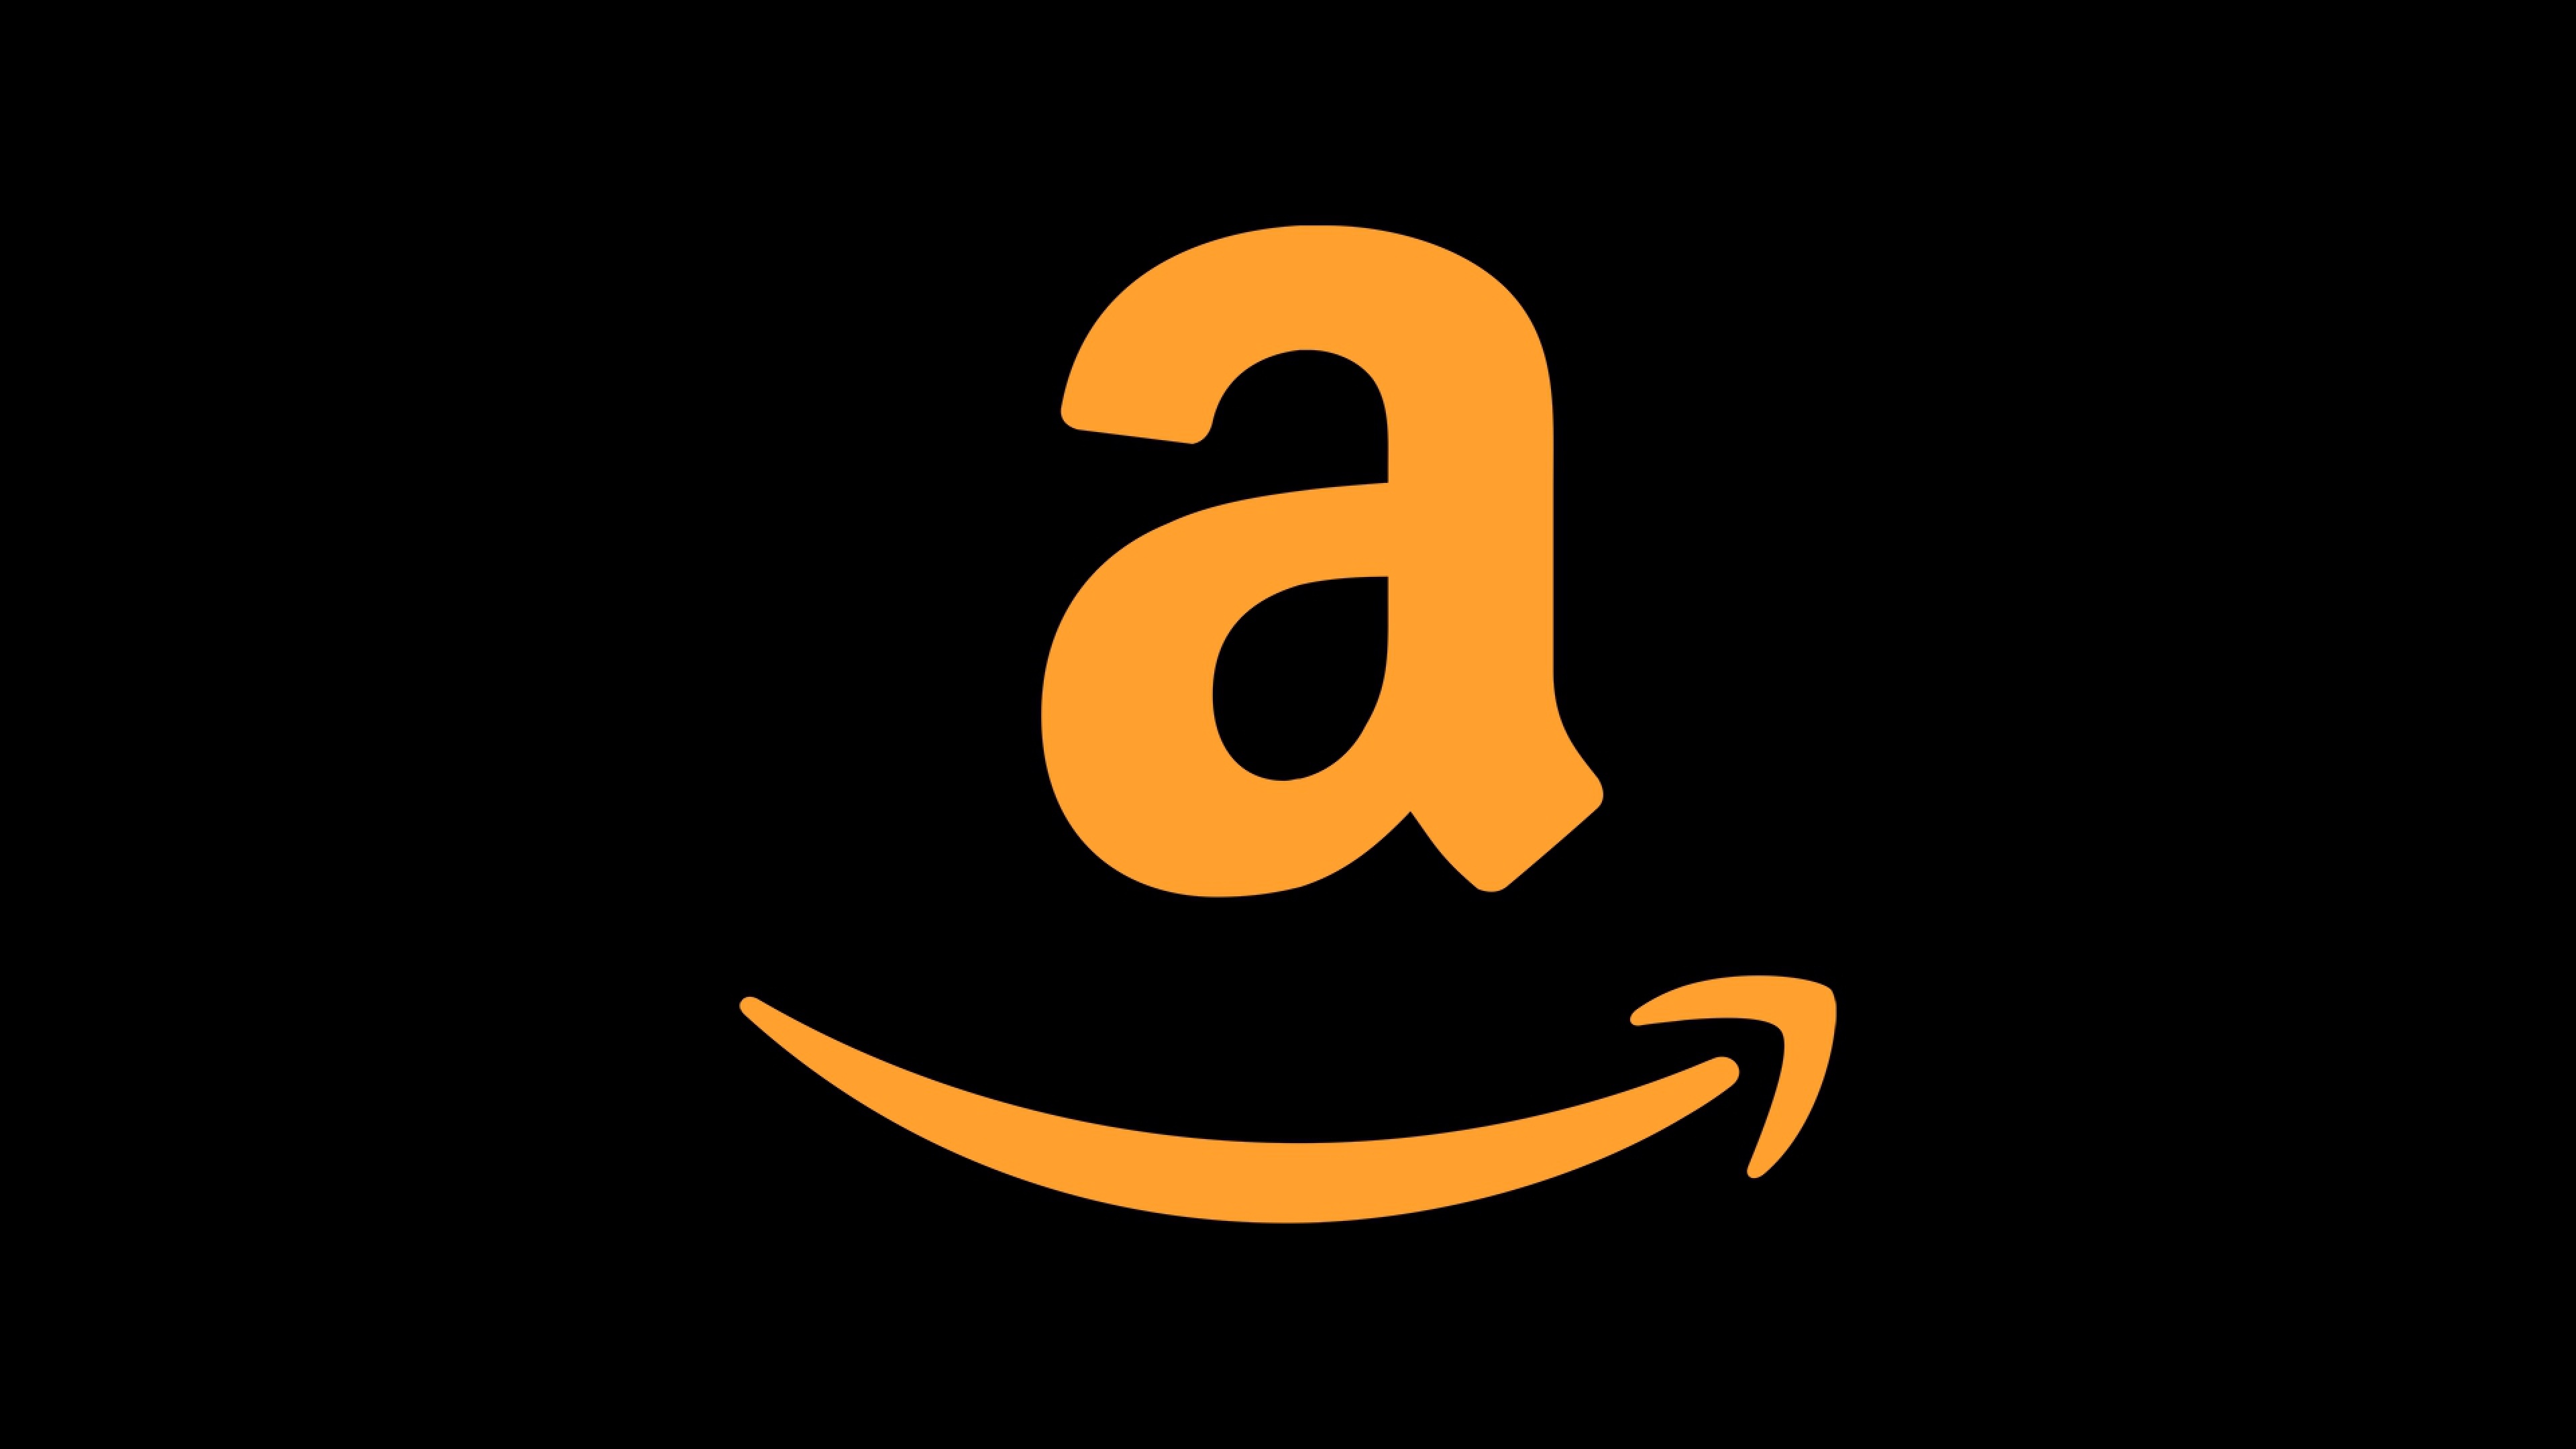 Amazon: Minimalistic logo, An American multinational technology company. 3840x2160 4K Wallpaper.